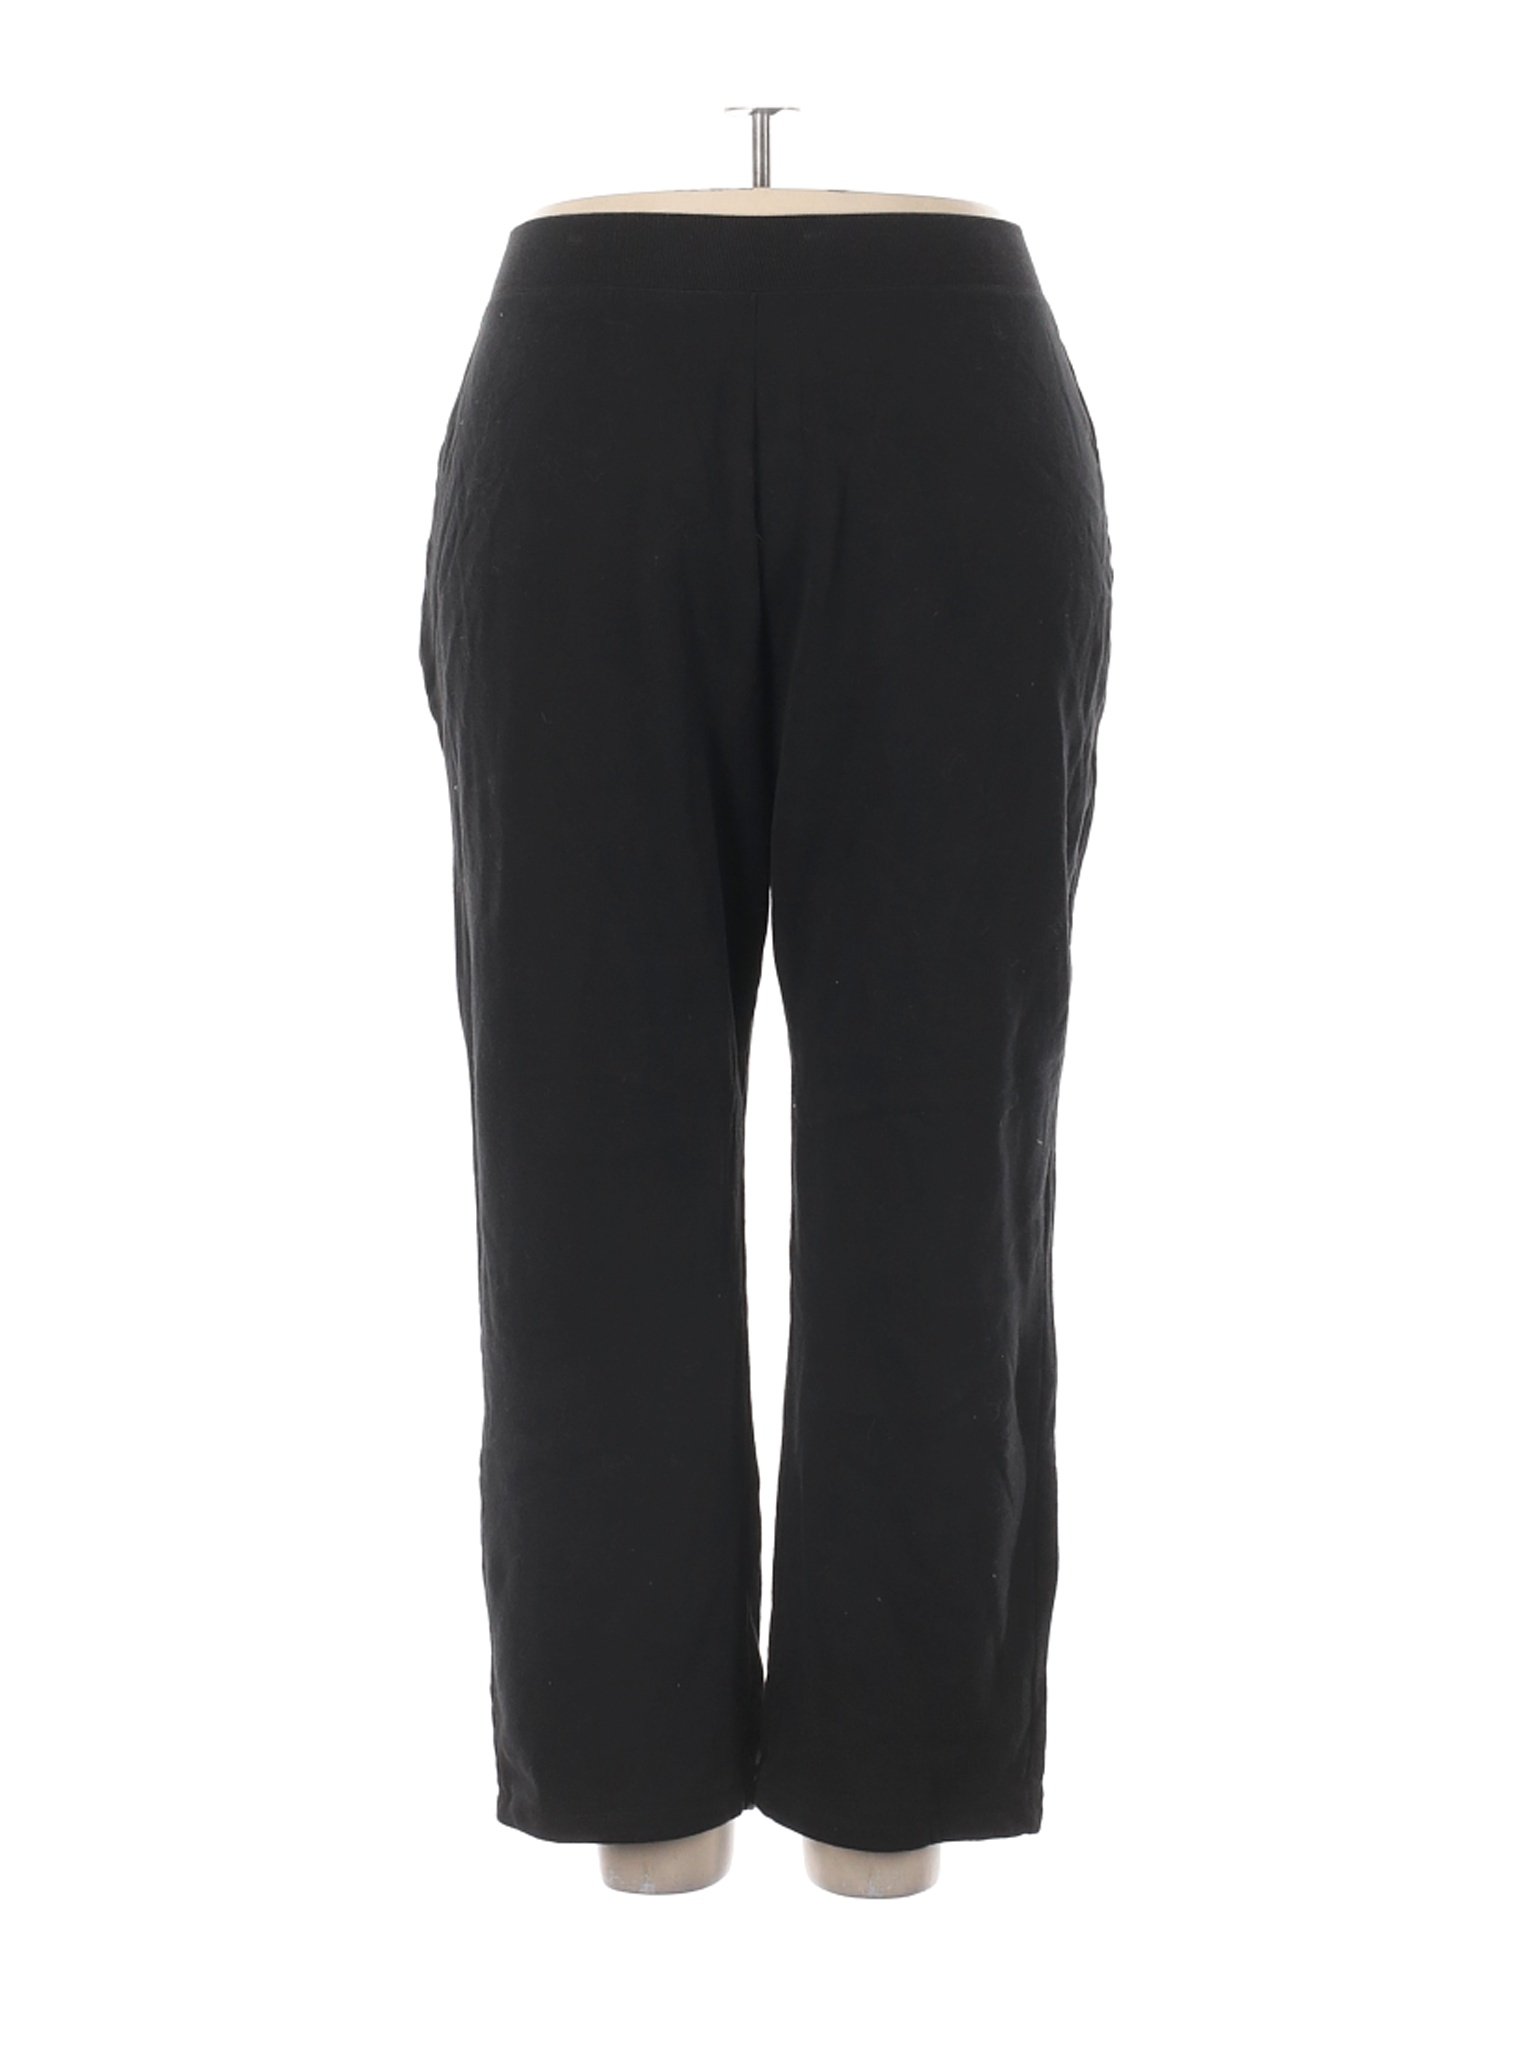 Just My Size Women Black Casual Pants 22 Plus | eBay